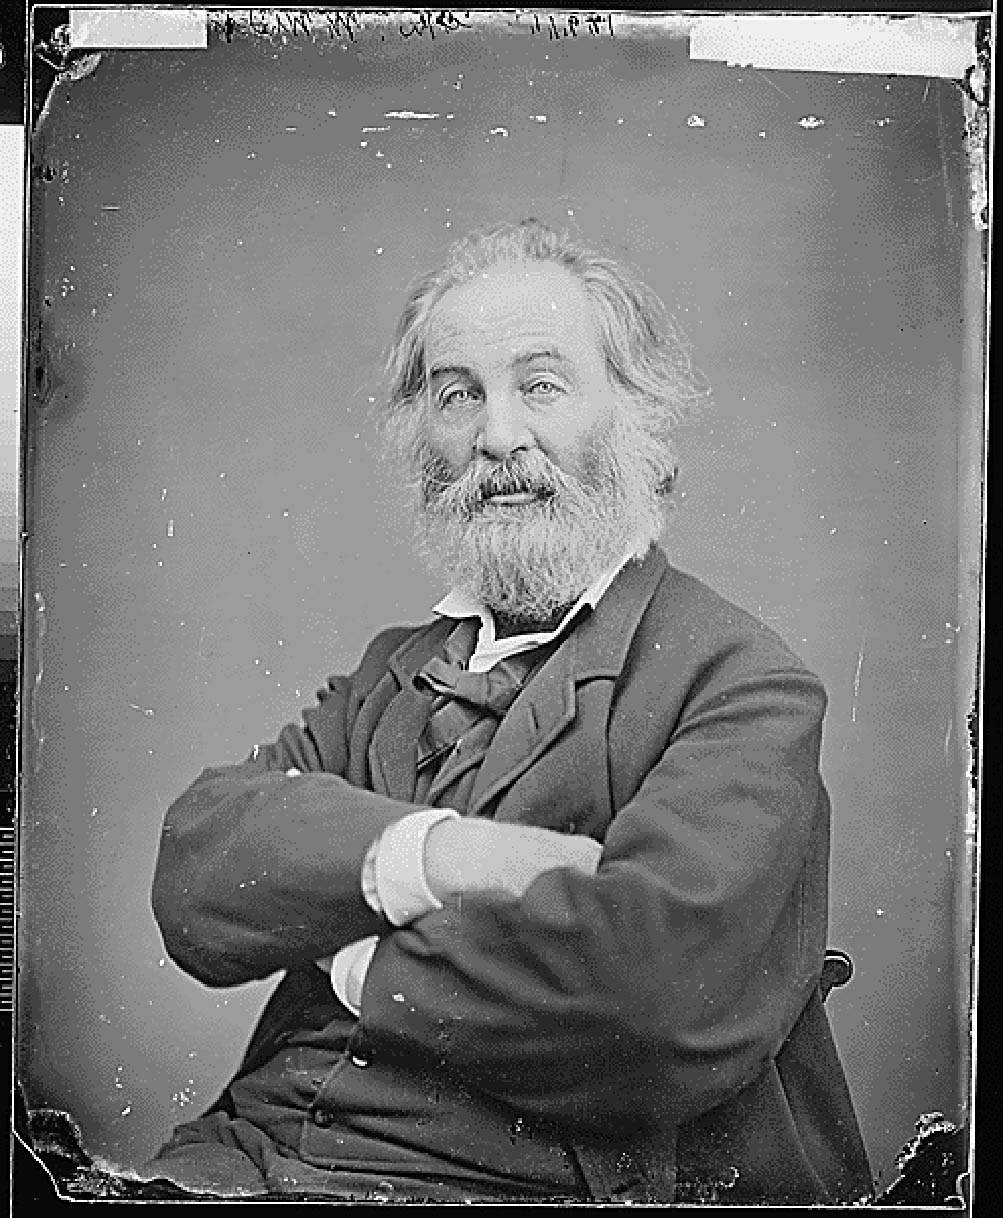 Whitman photographed by Matthew Brady around 1865. That mocking gaze.